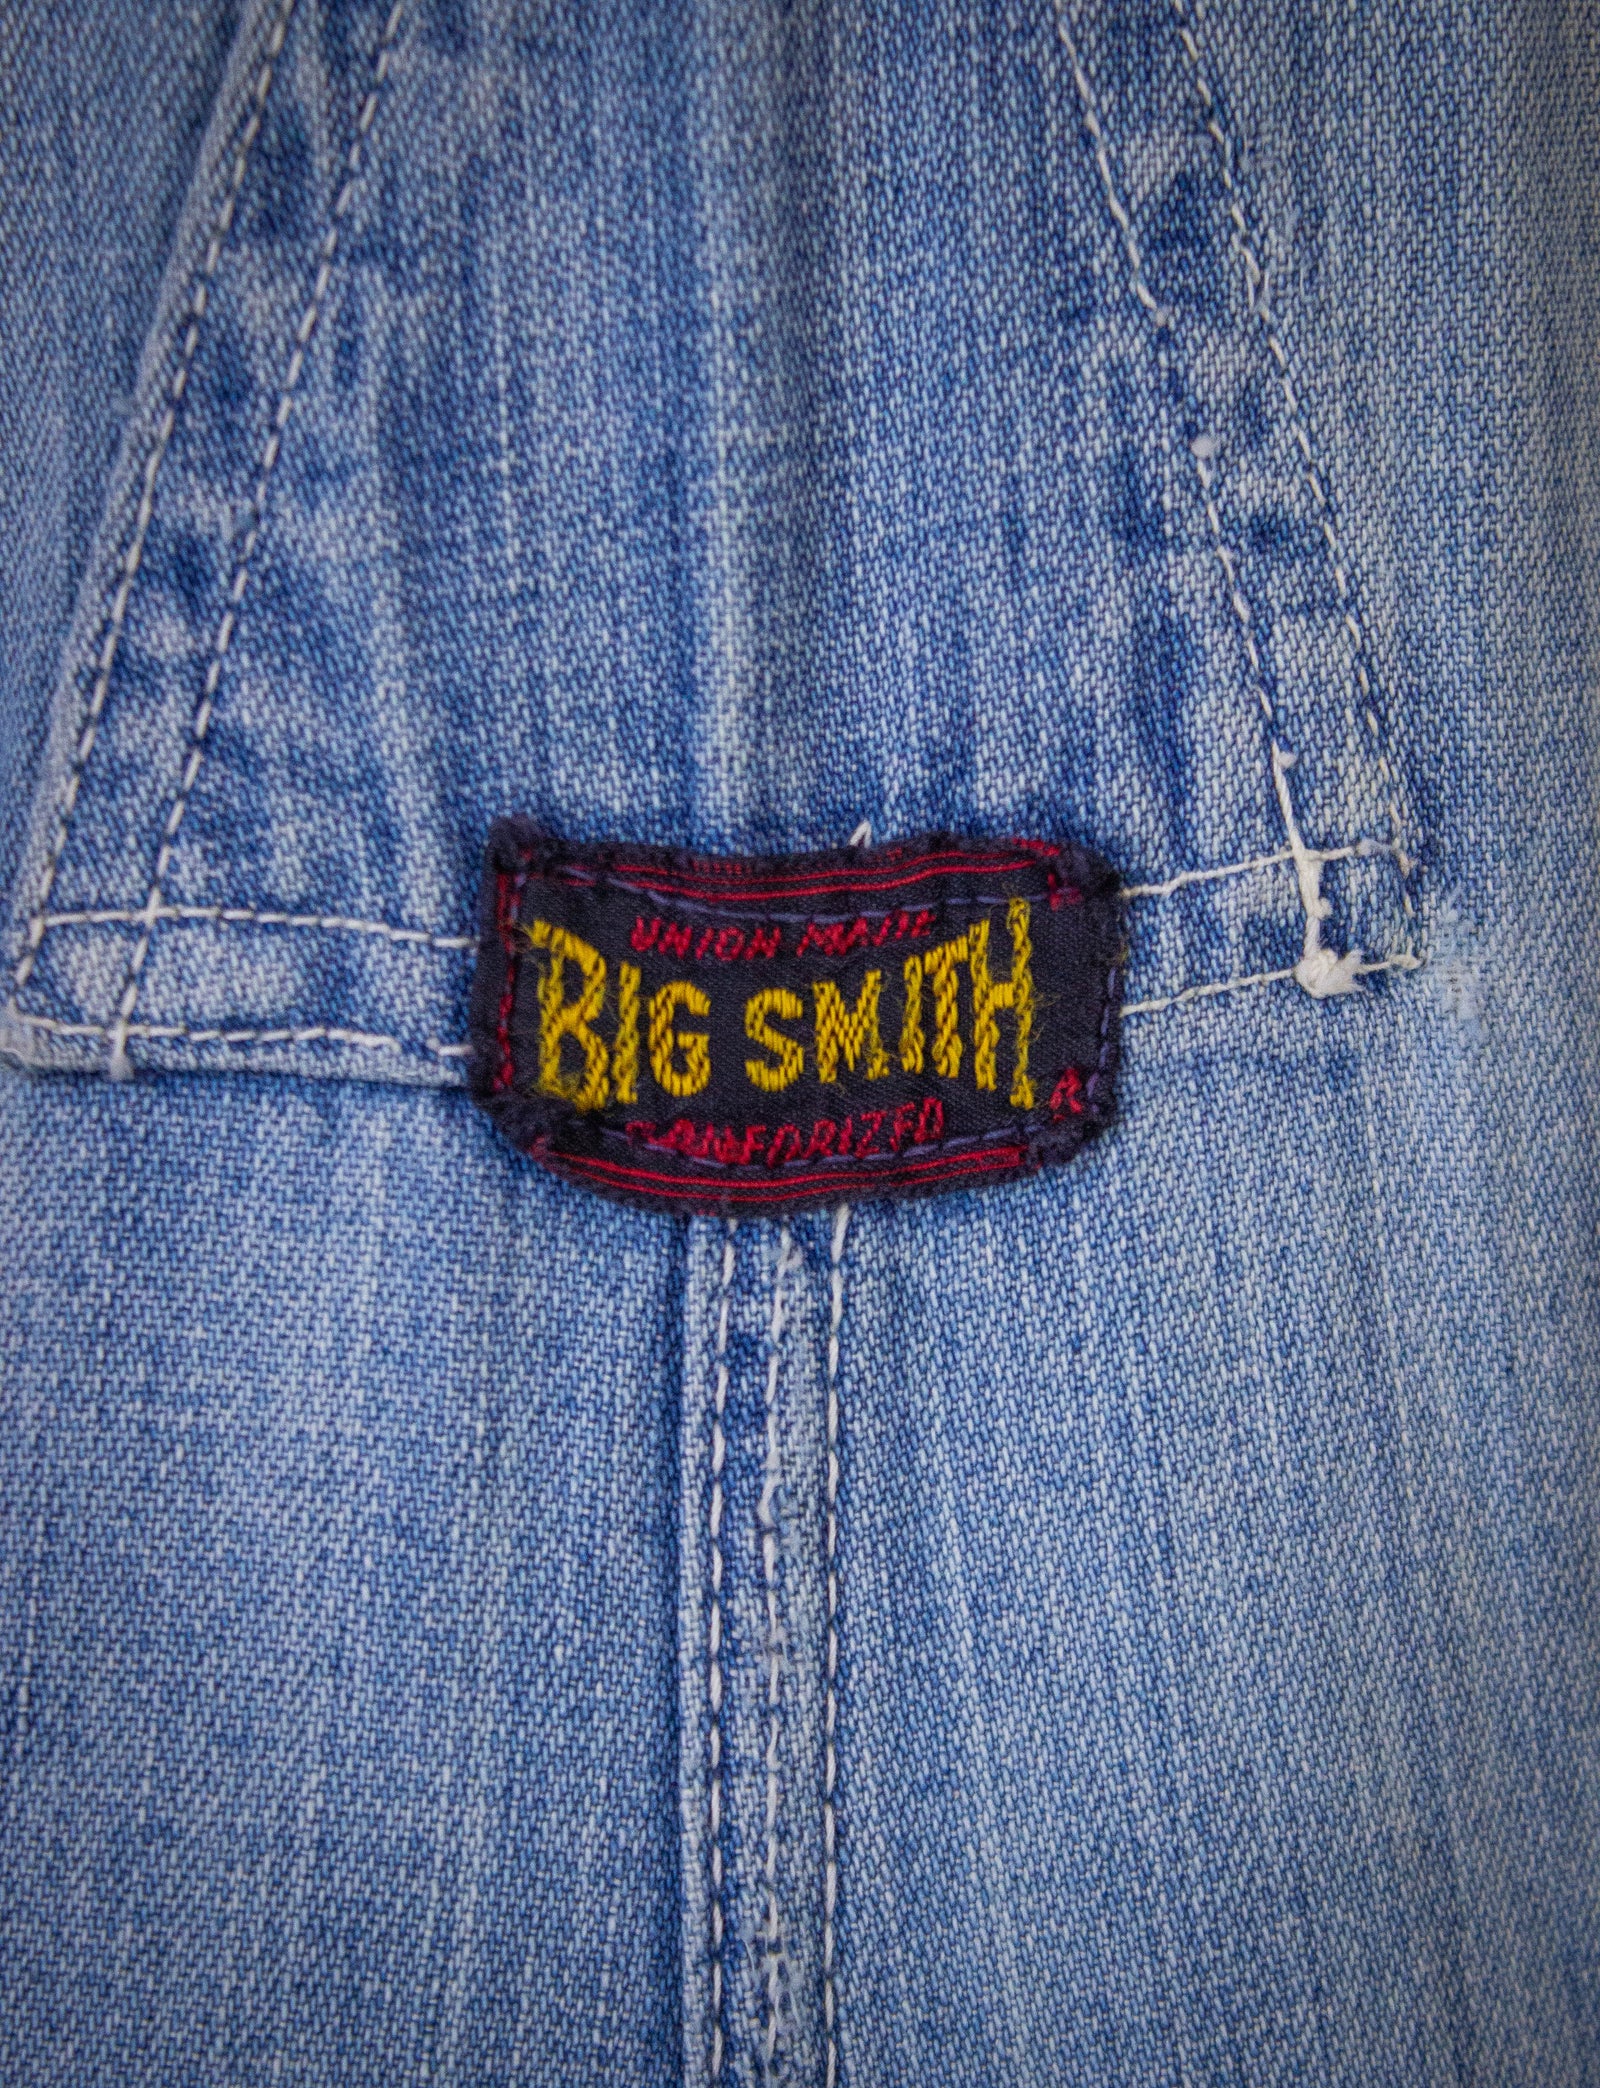 Vintage Big Smith Denim Overalls 50s 34x27